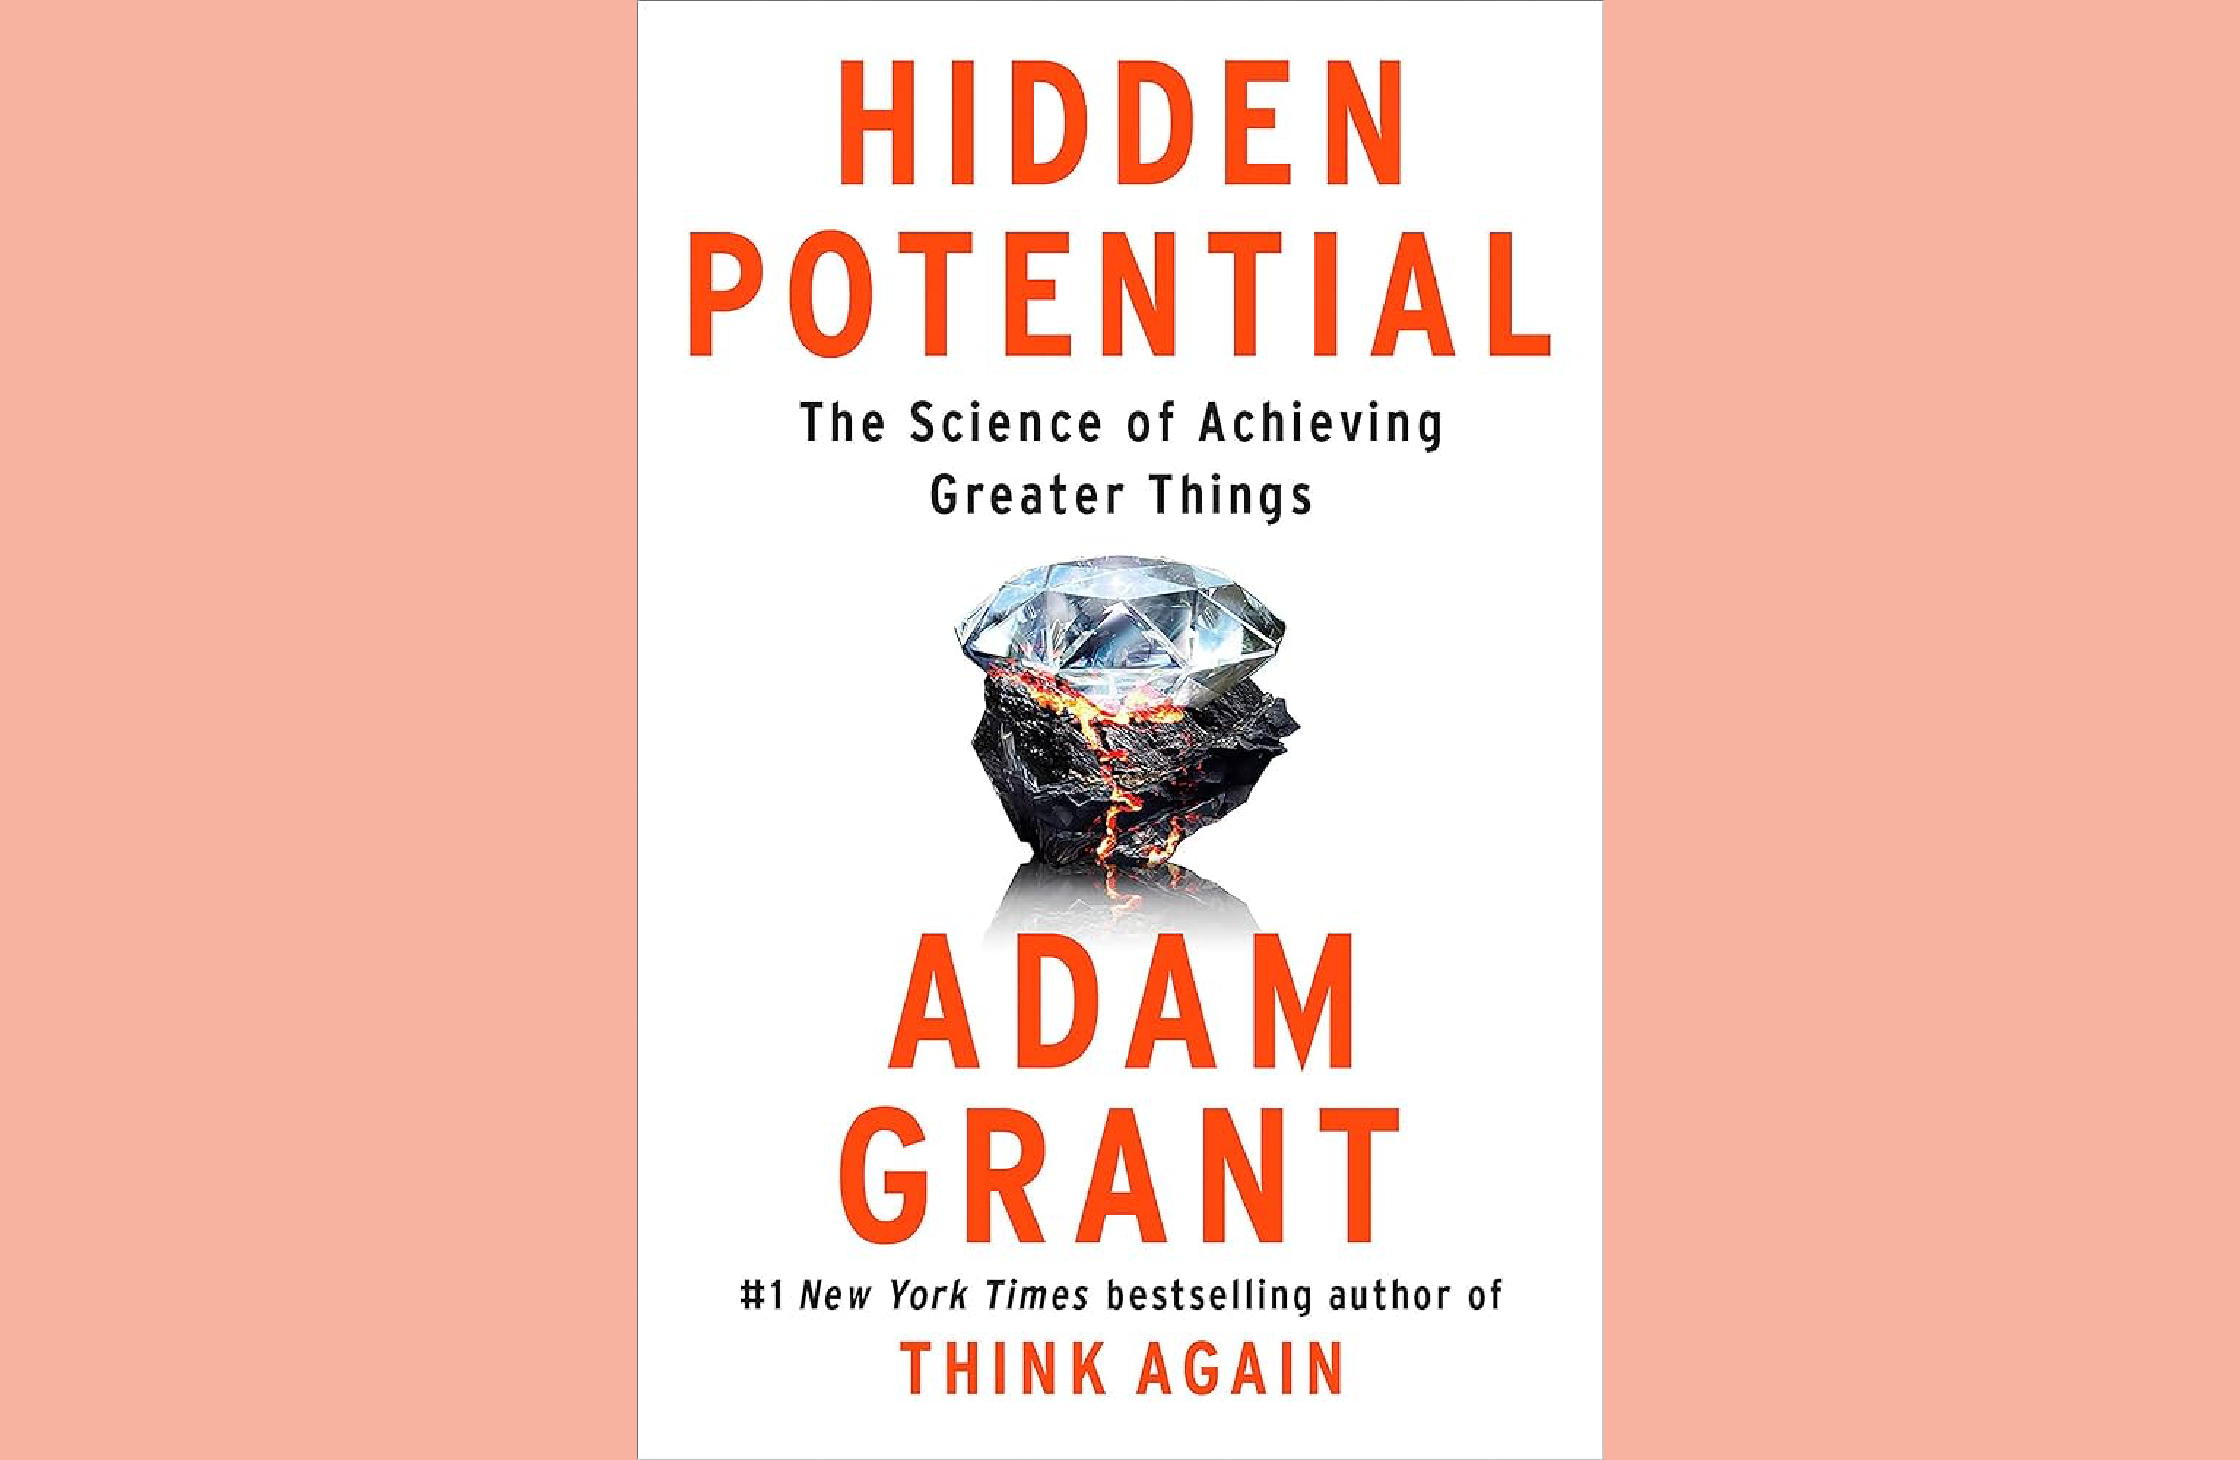 Summary: Hidden Potential by Adam Grant